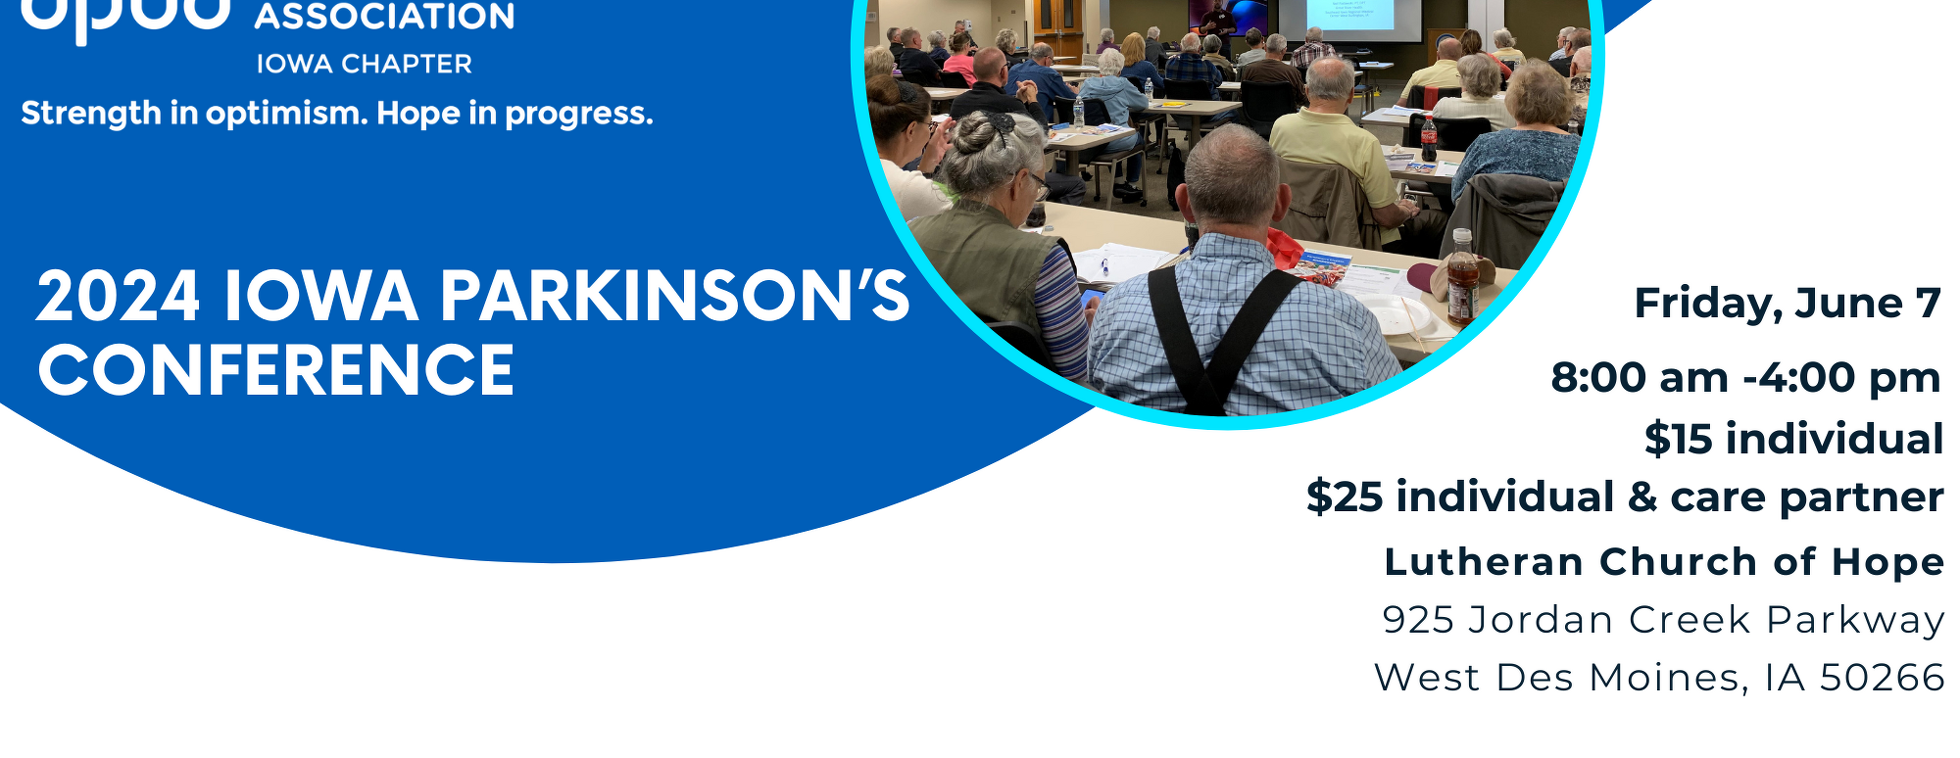 2024 Iowa Parkinson's Disease Conference